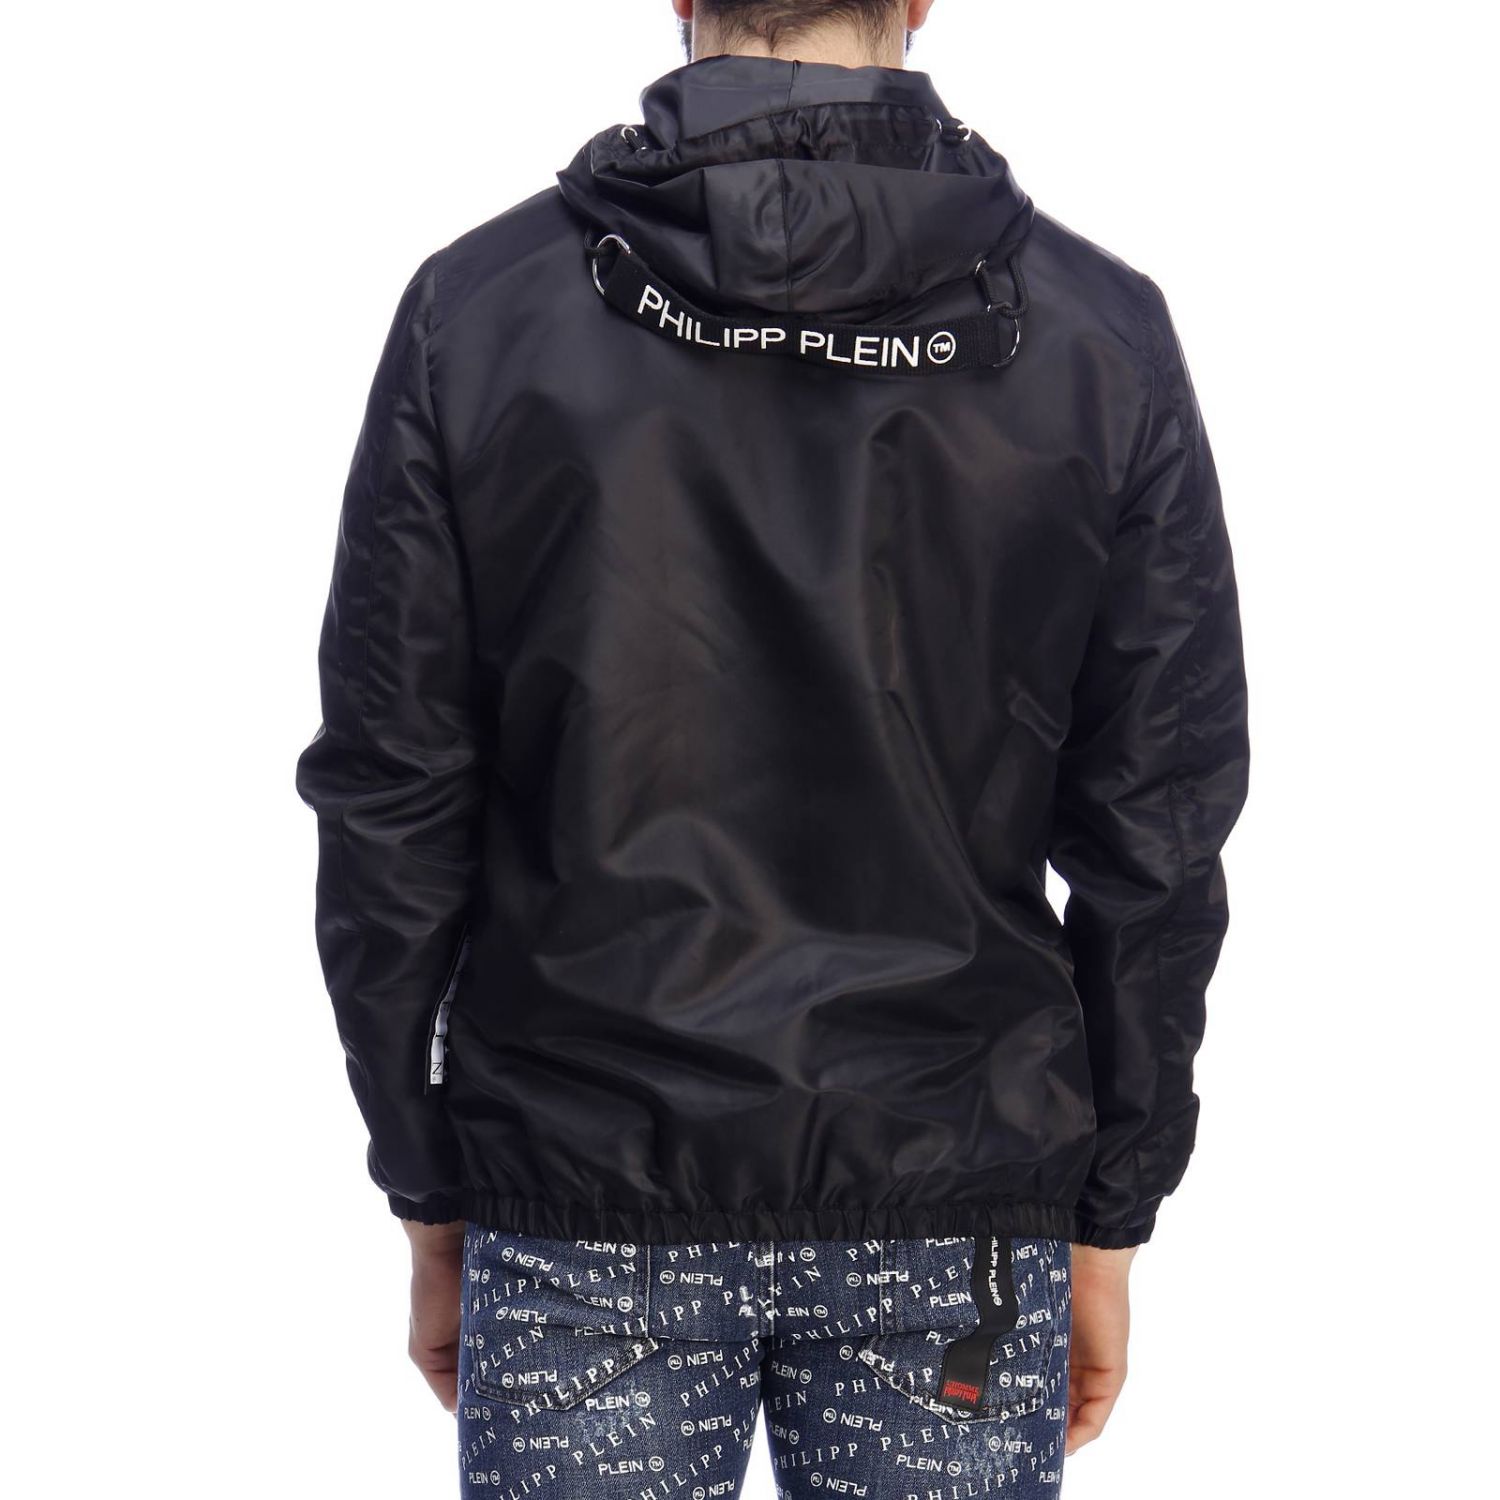 Philipp Plein Outlet: jacket for man - Black | Philipp Plein jacket ...